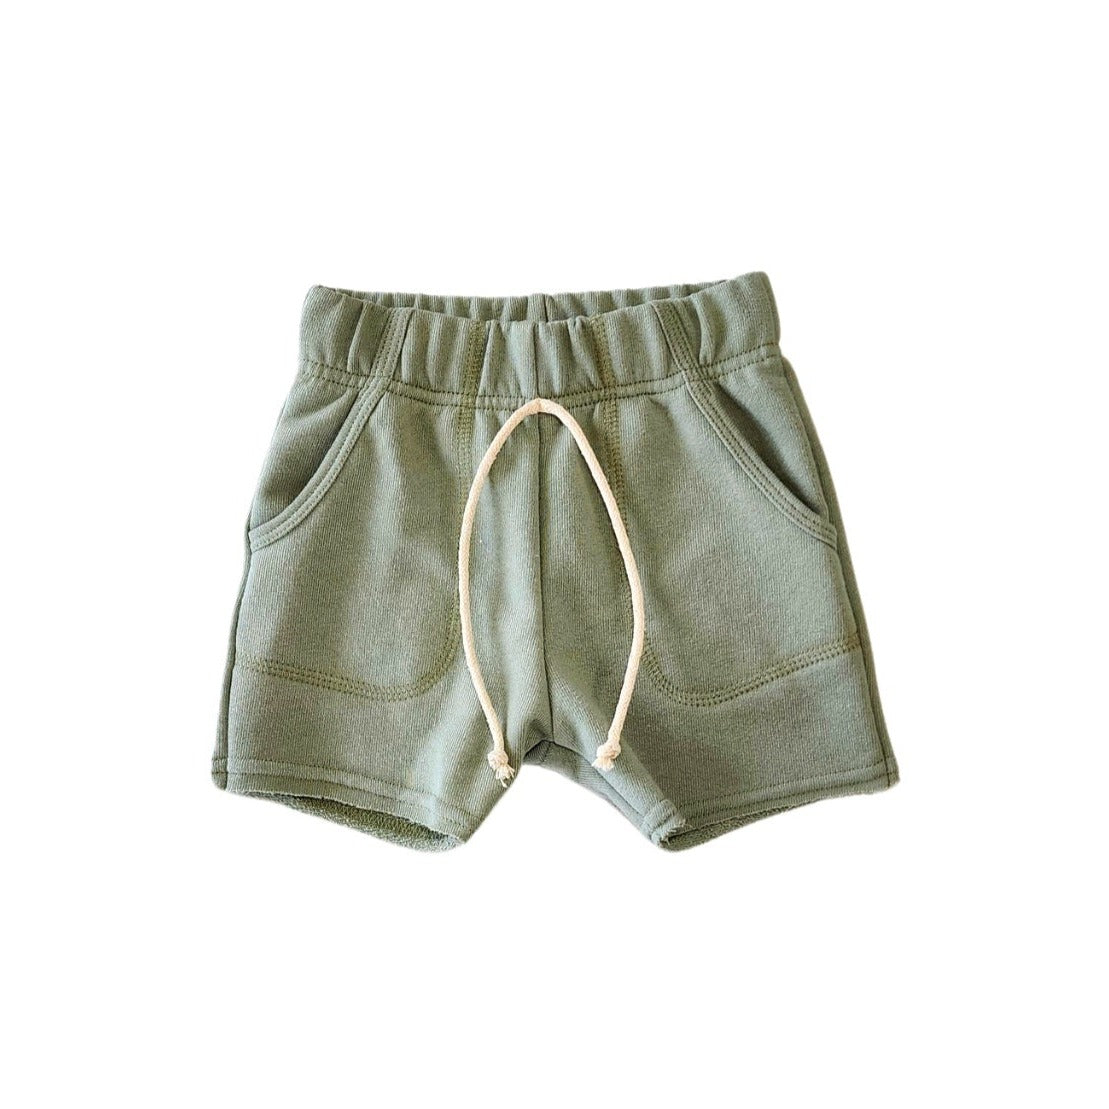 sk8 shorts - pale green